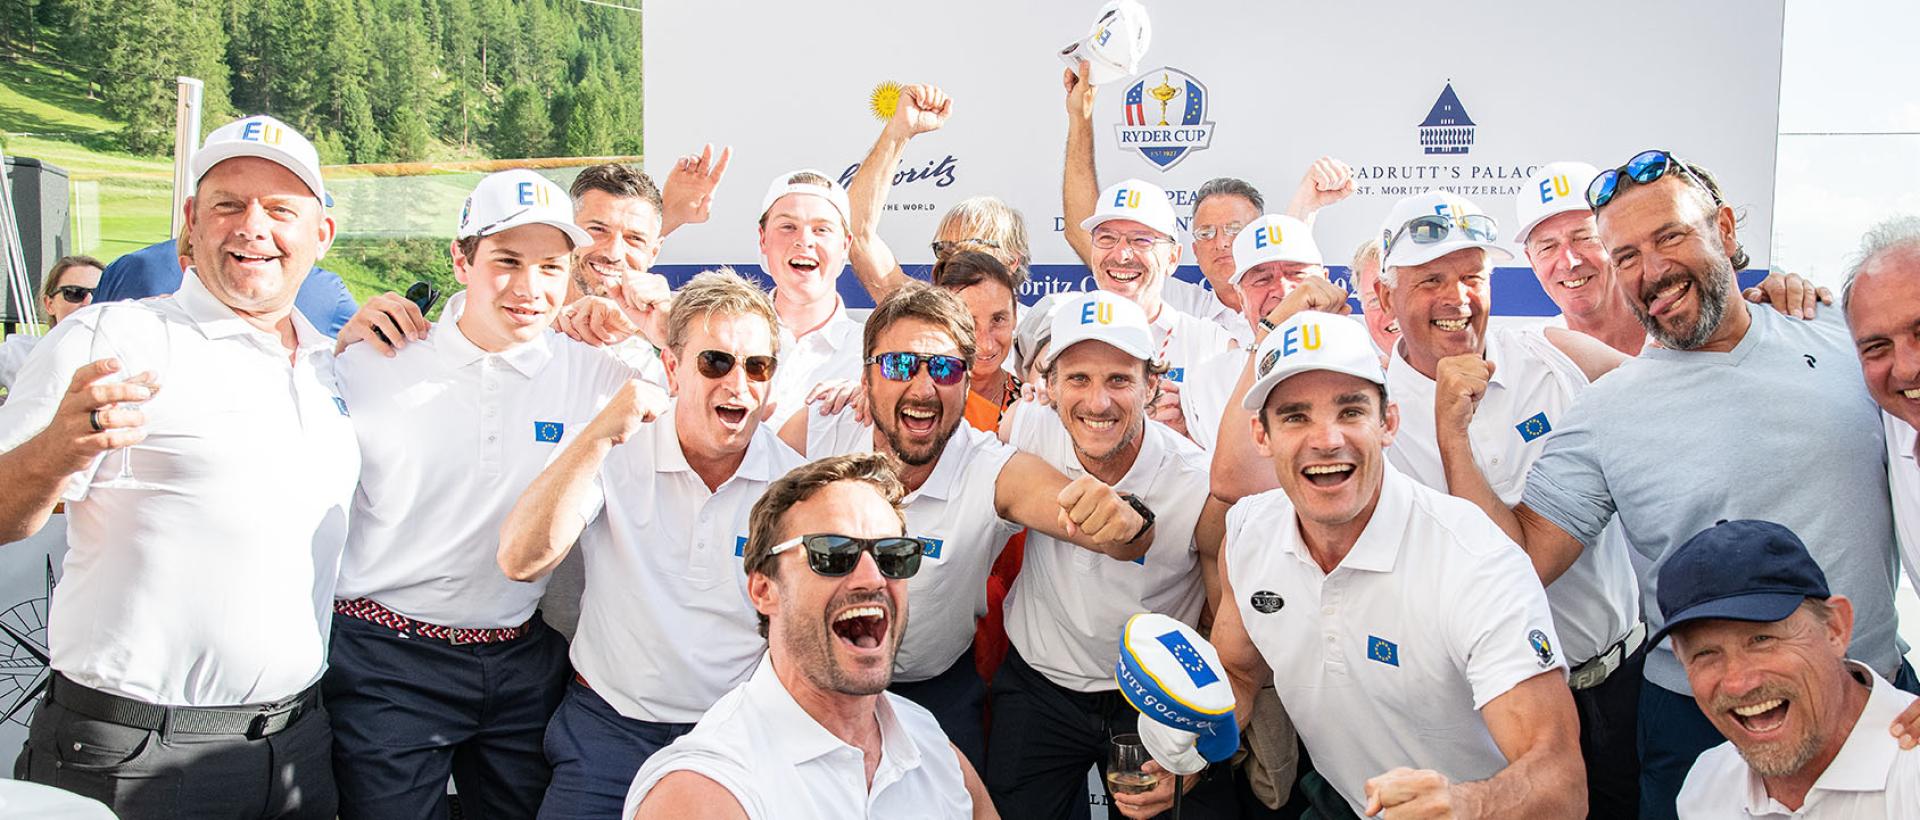 St. Moritz Celebrity Golf Cup Team Europe 2022